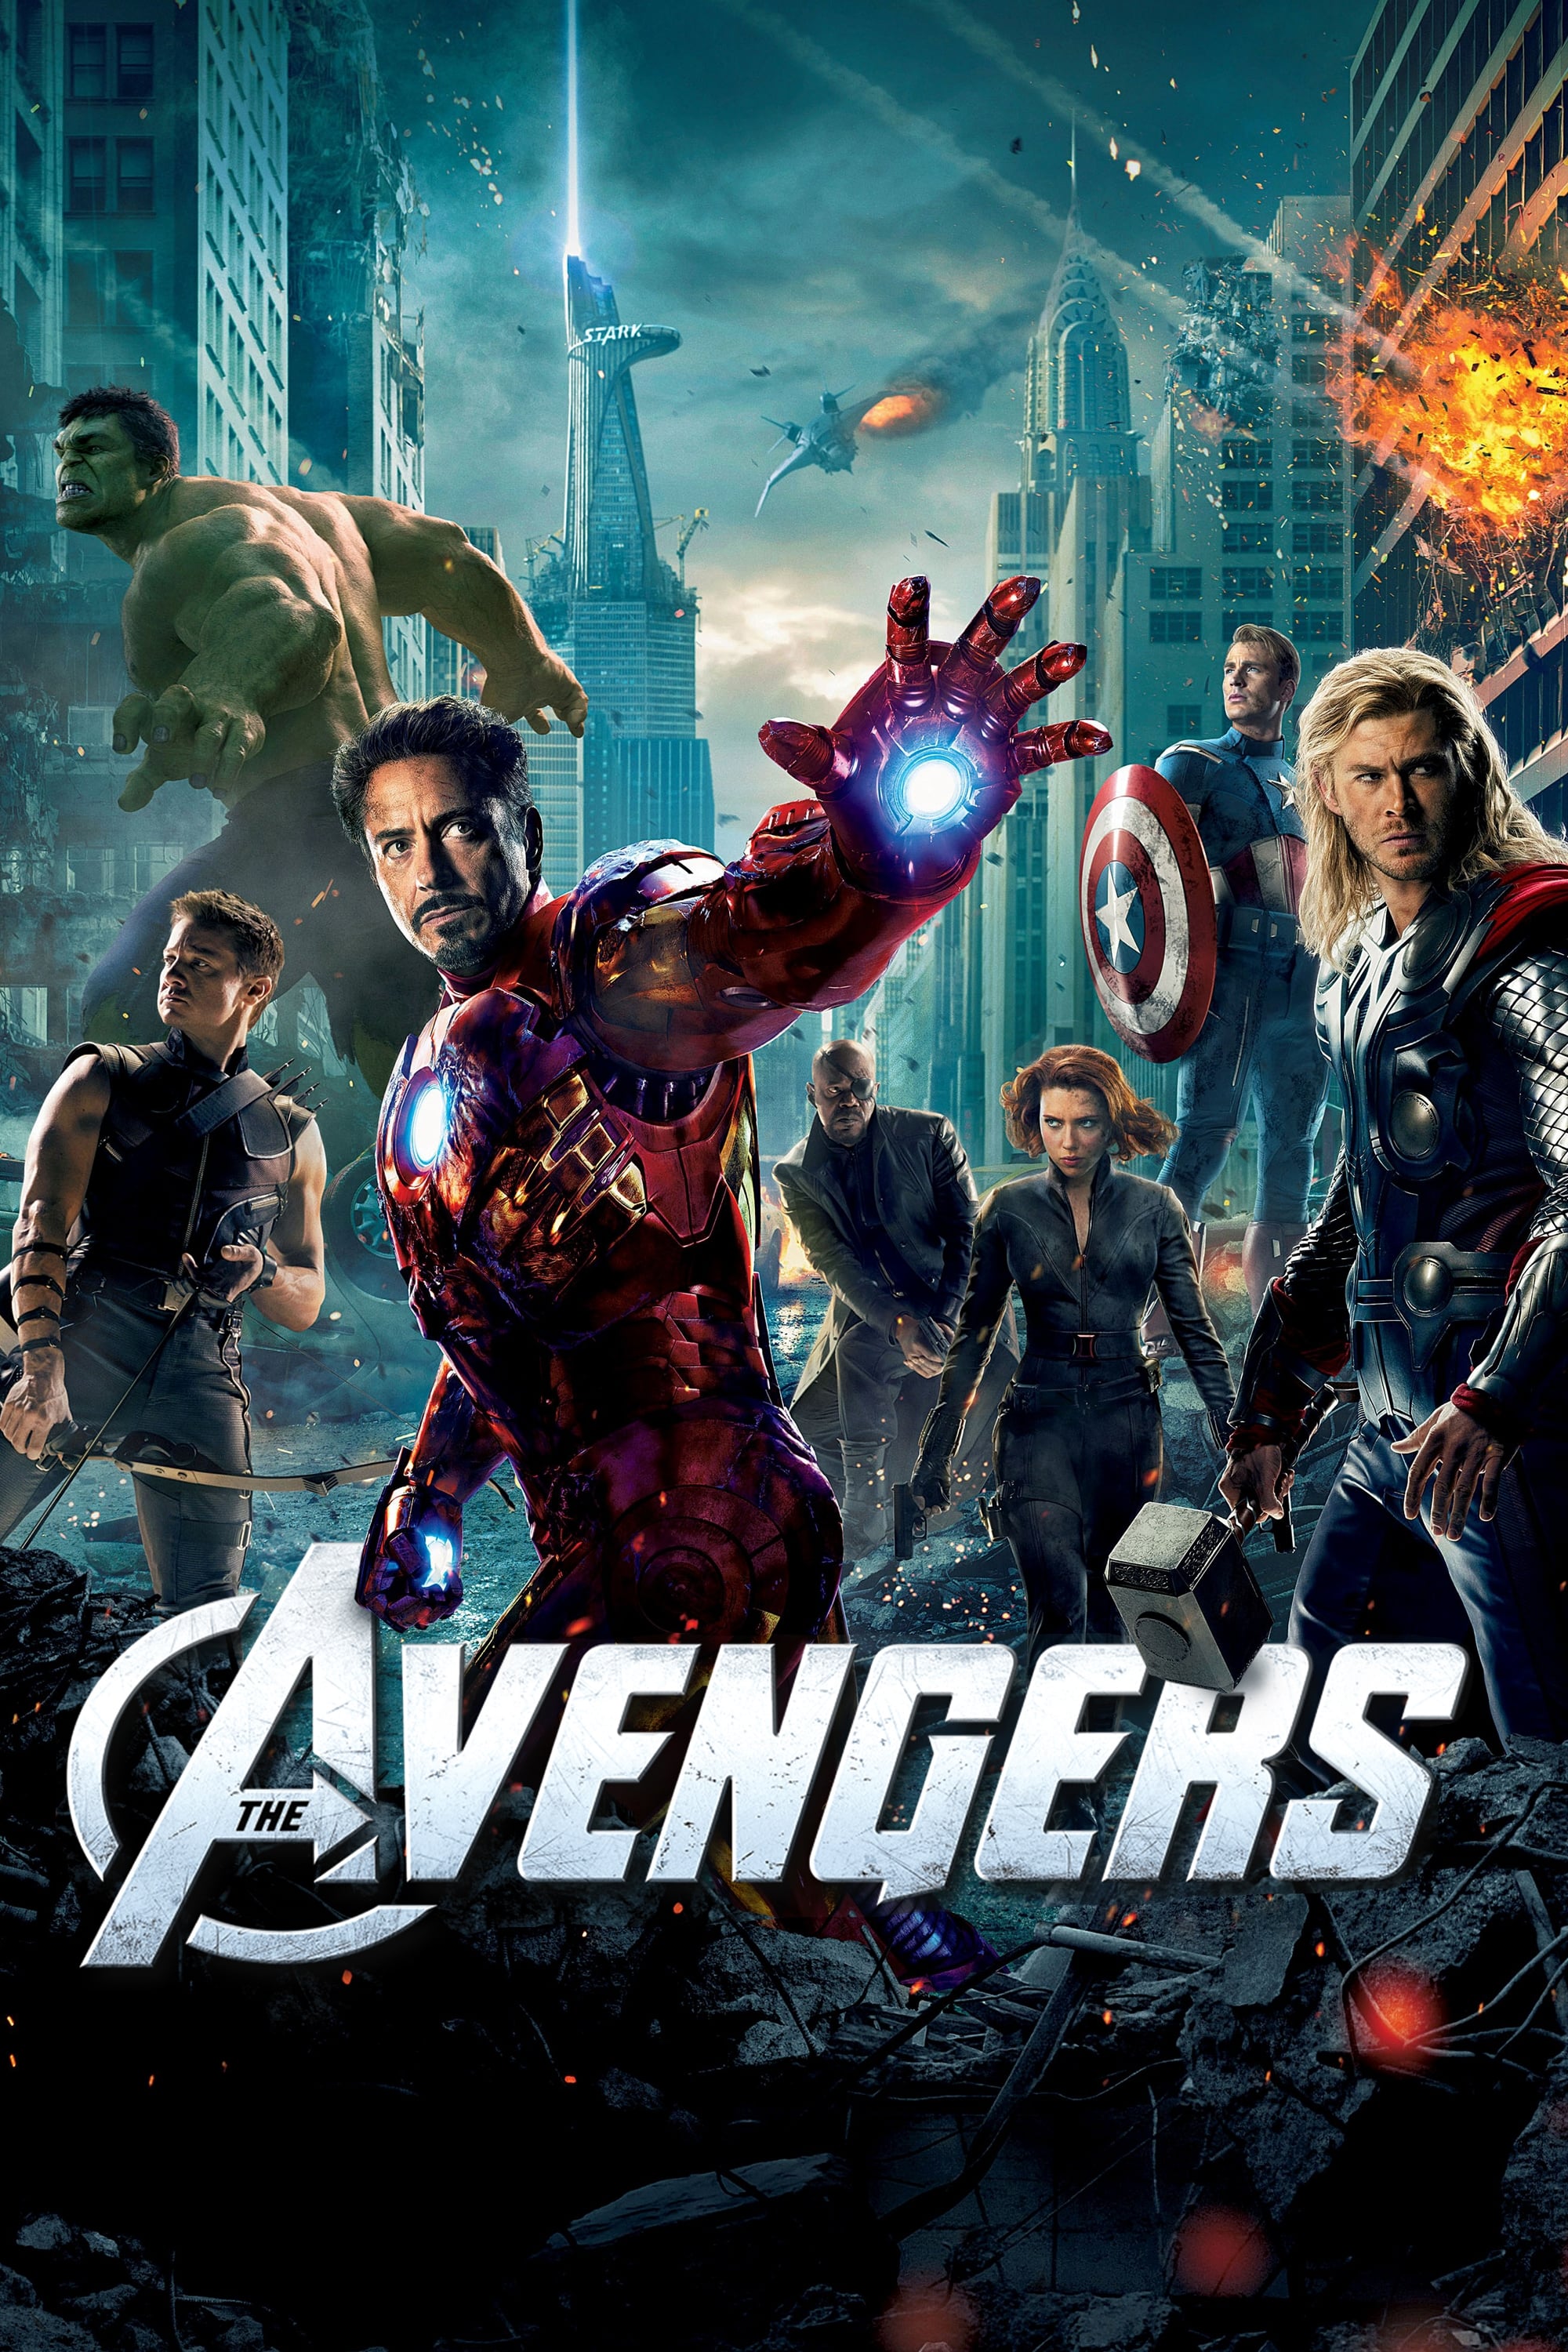 The Avengers Box Office Hit